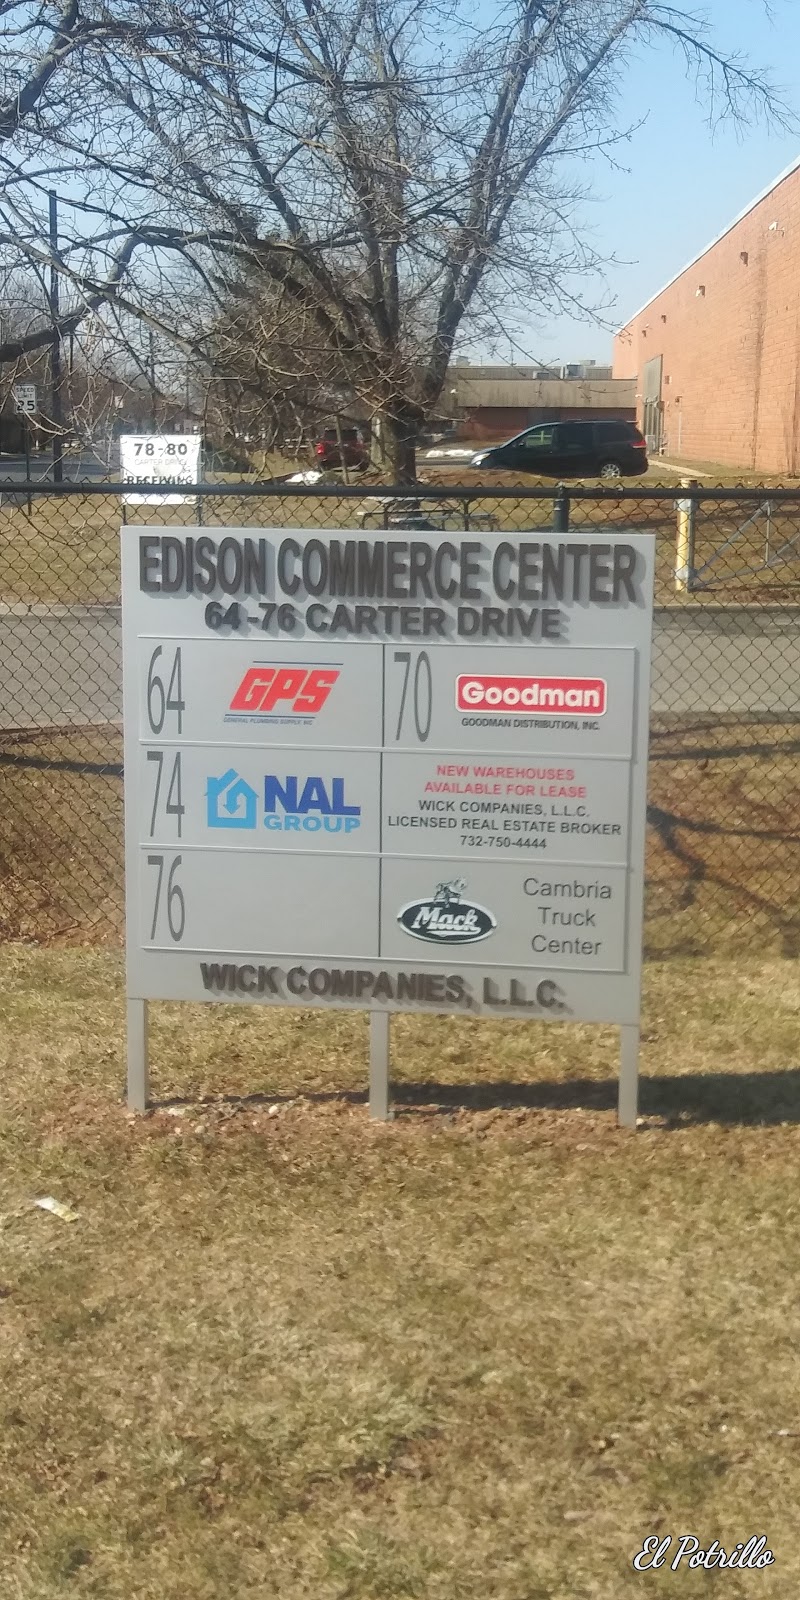 General Plumbing Supply Distribution Center | 64 Carter Dr, Edison, NJ 08817 | Phone: (732) 248-1000